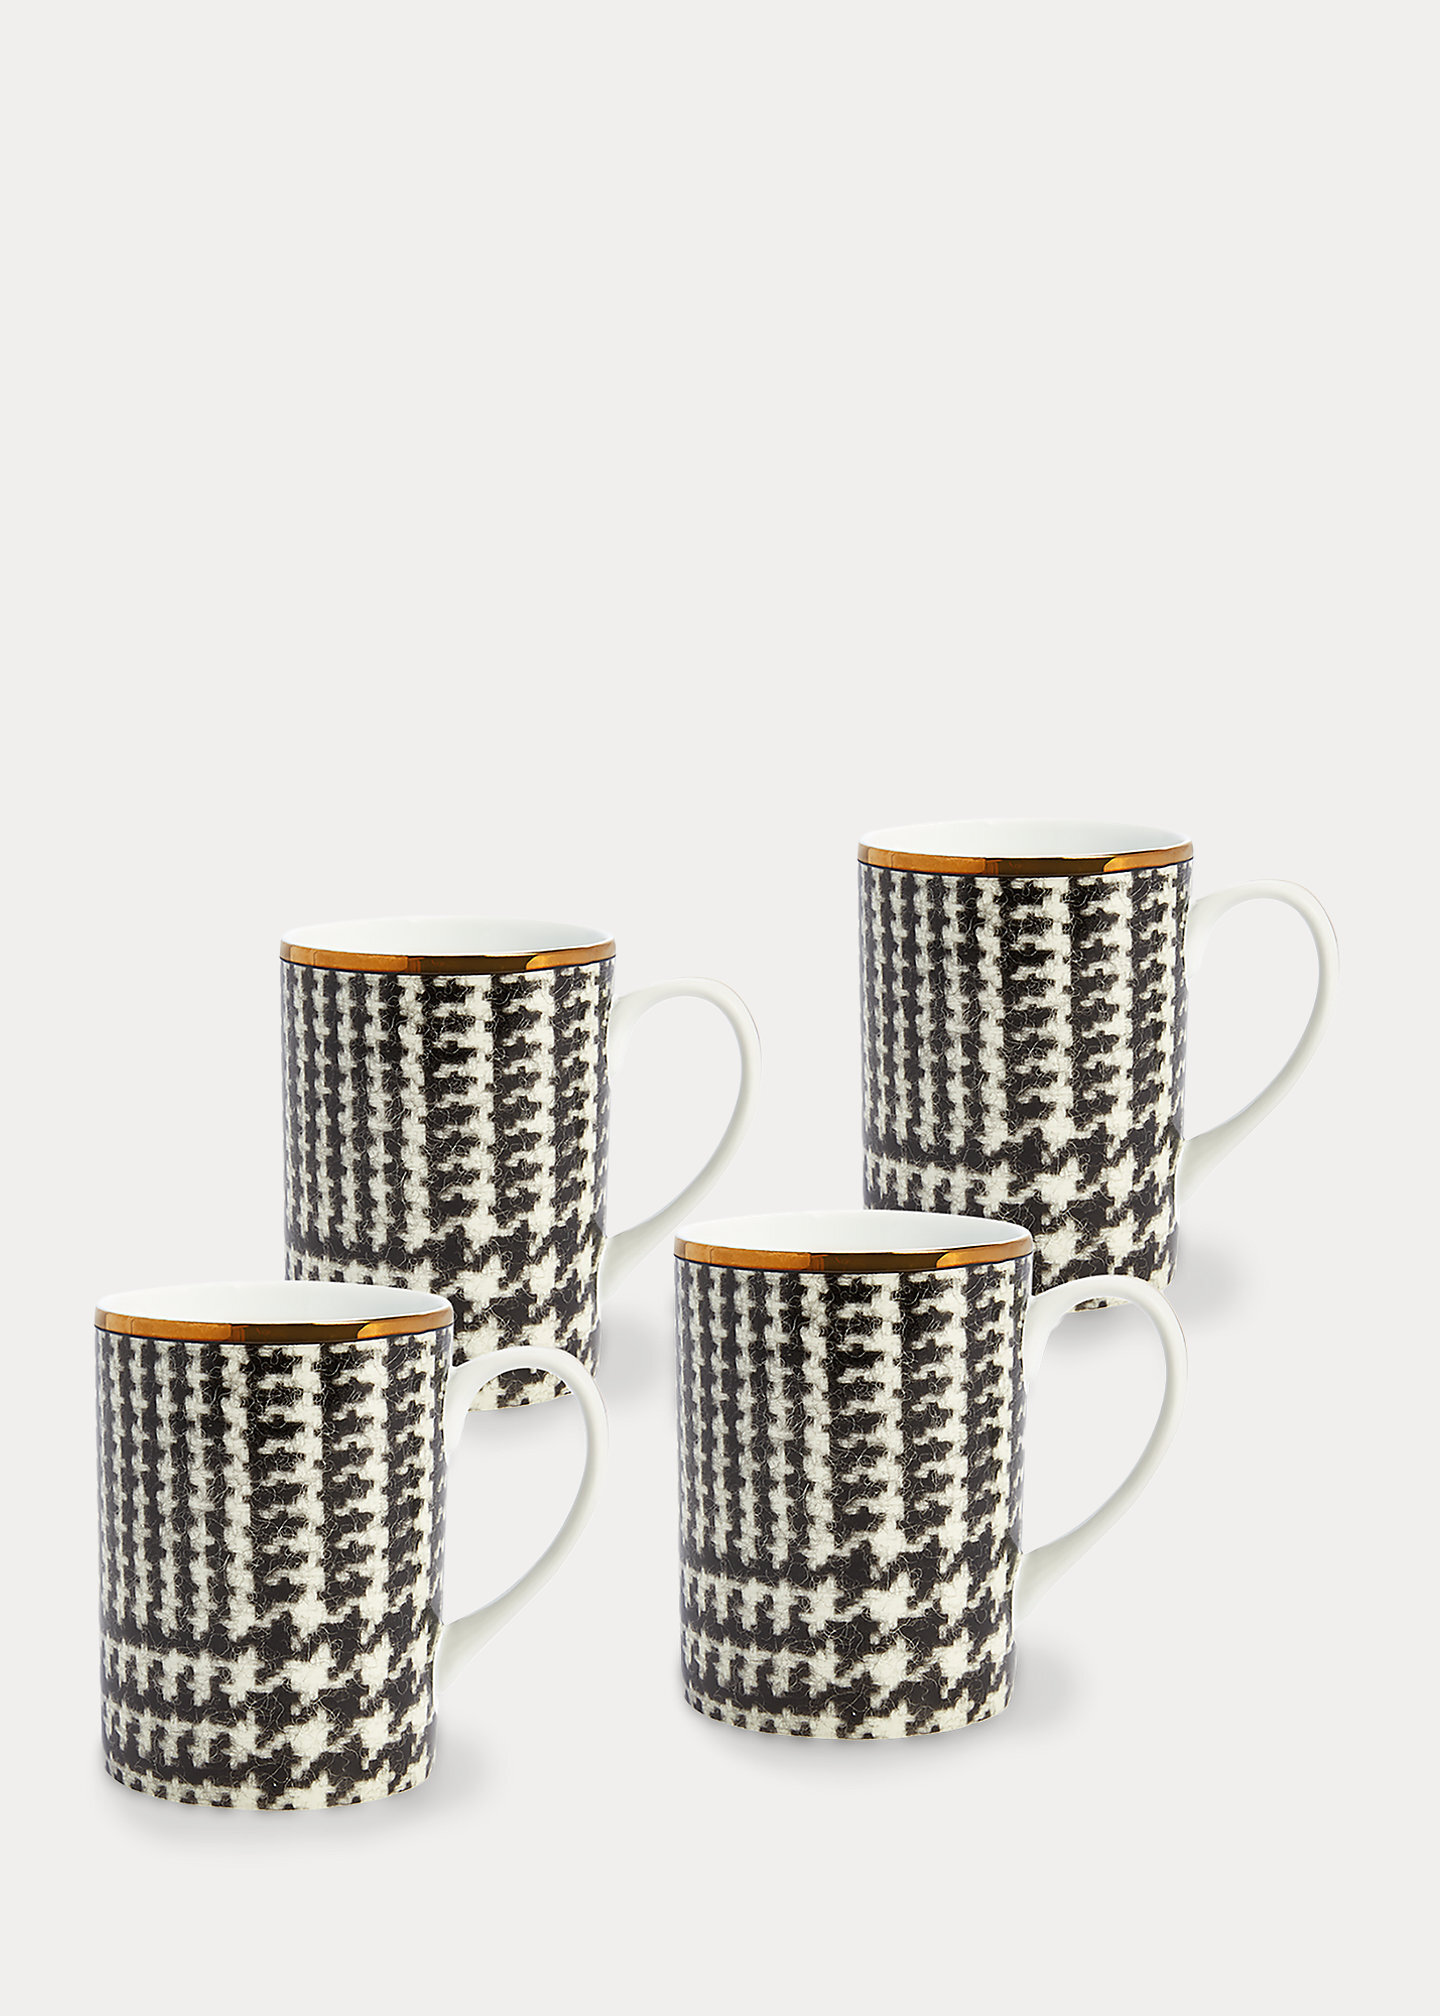 Ralph Lauren Wessex 4 Piece Coffee Mug Set | Perigold